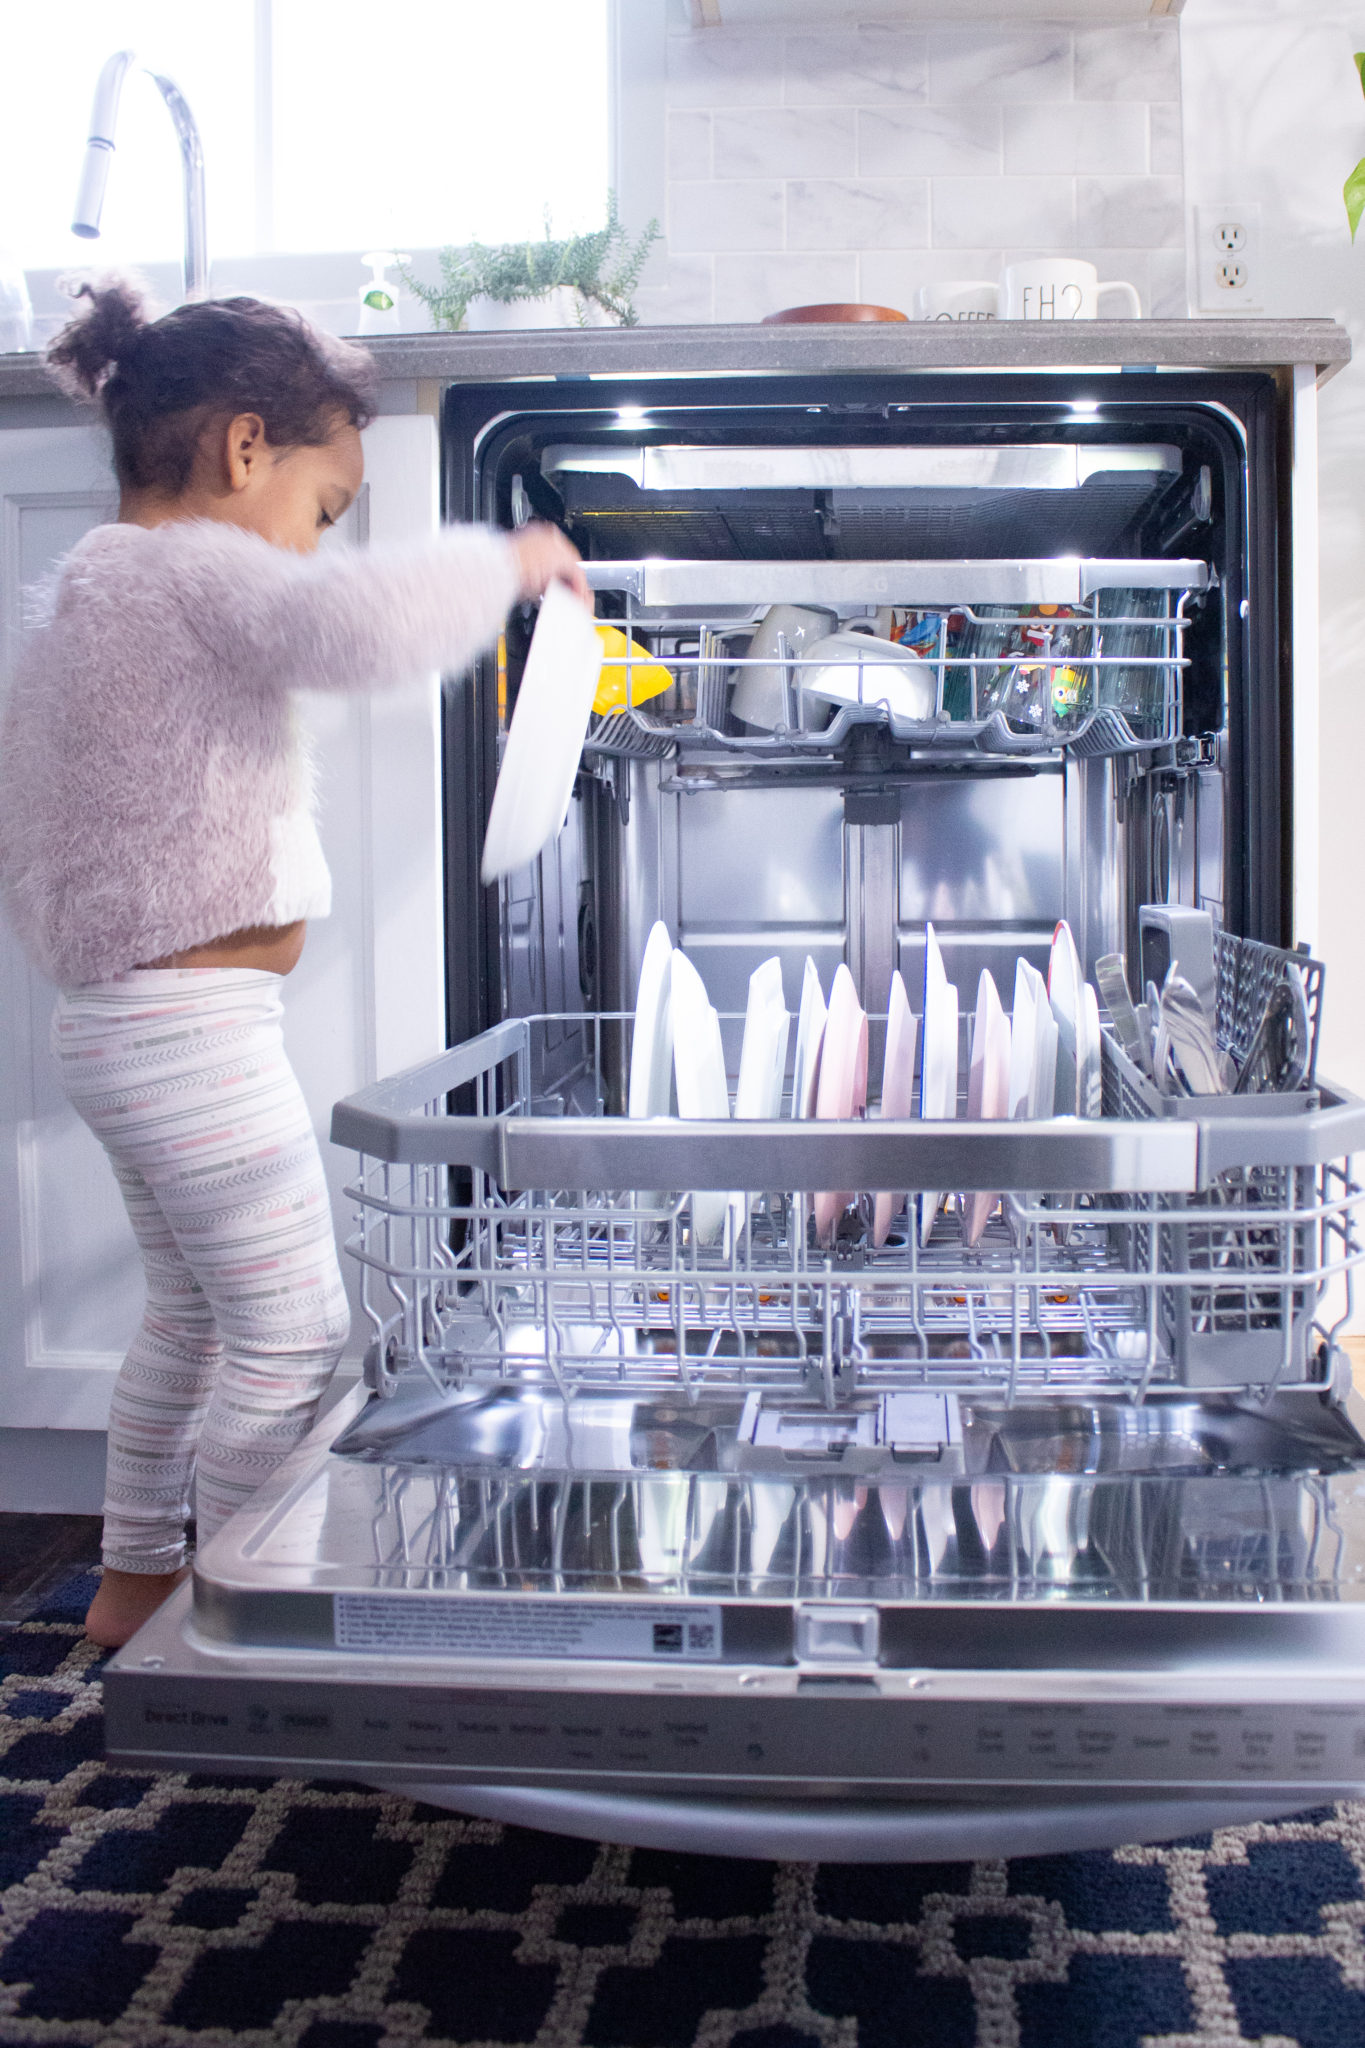 Easy Toddler Chores | LG QuadWash Steam Dishwasher Review